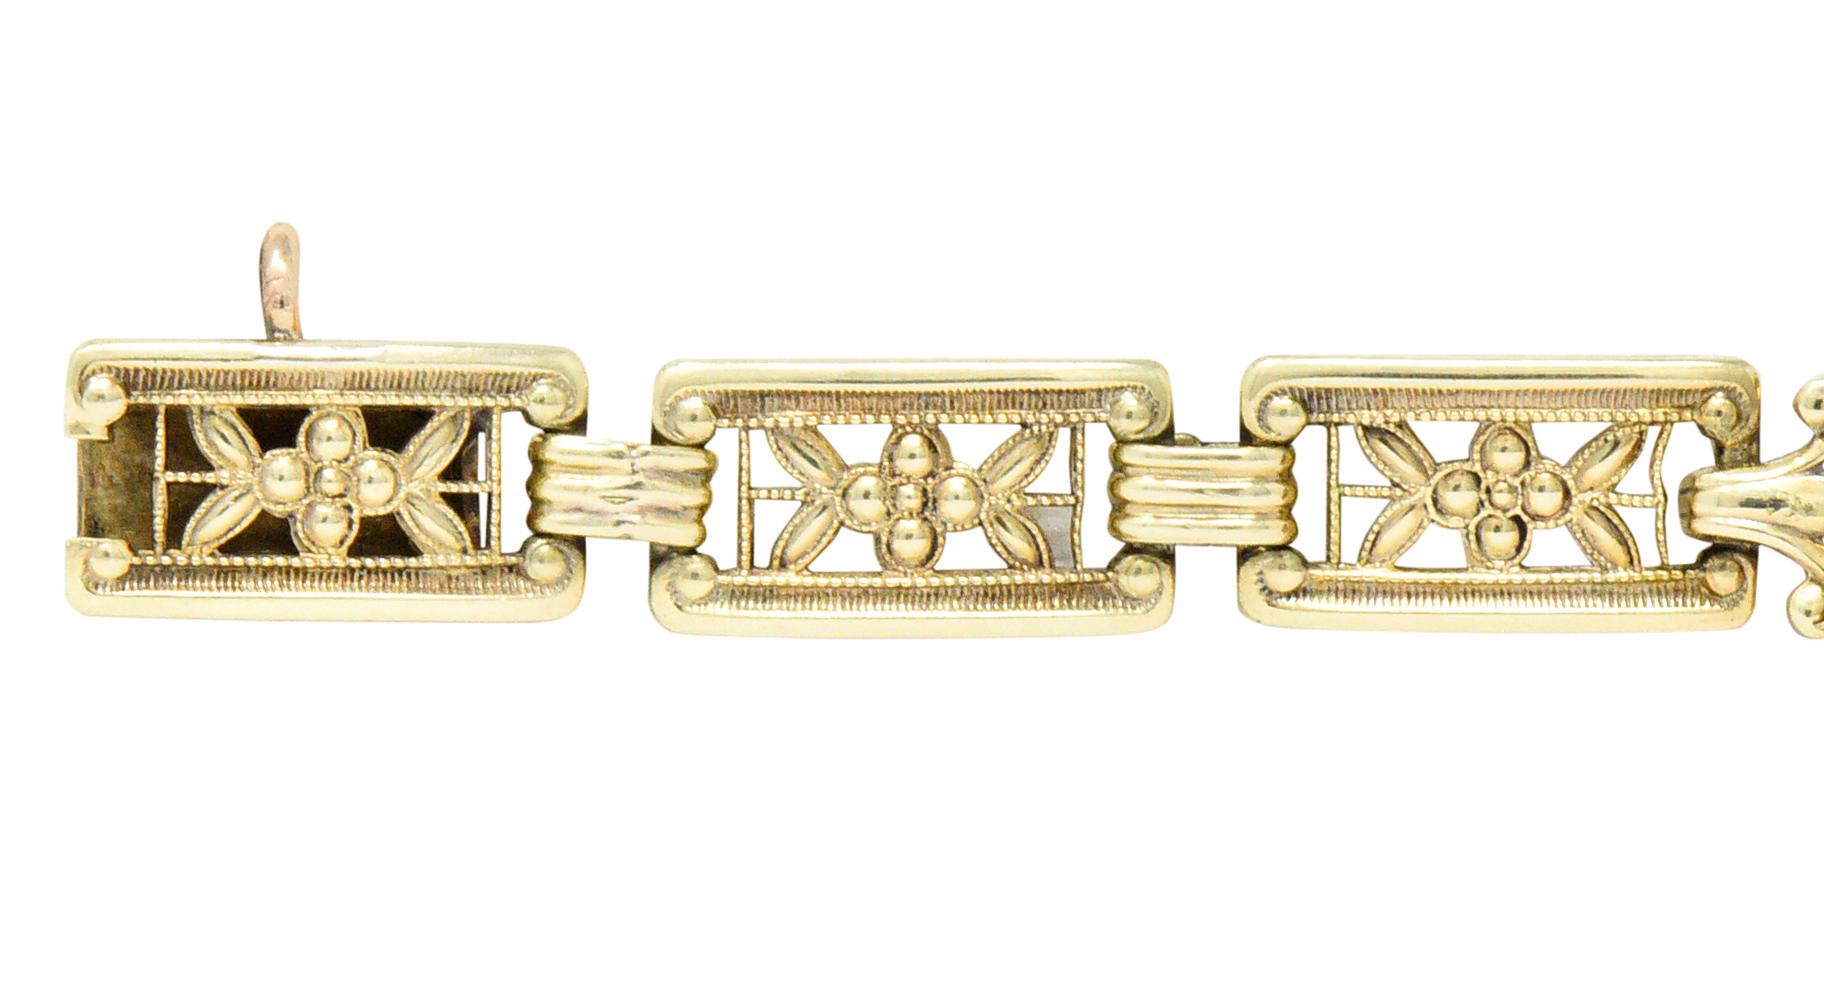 Theberath & Co. Art Nouveau Carnelian 14 Karat Gold Bracelet 1